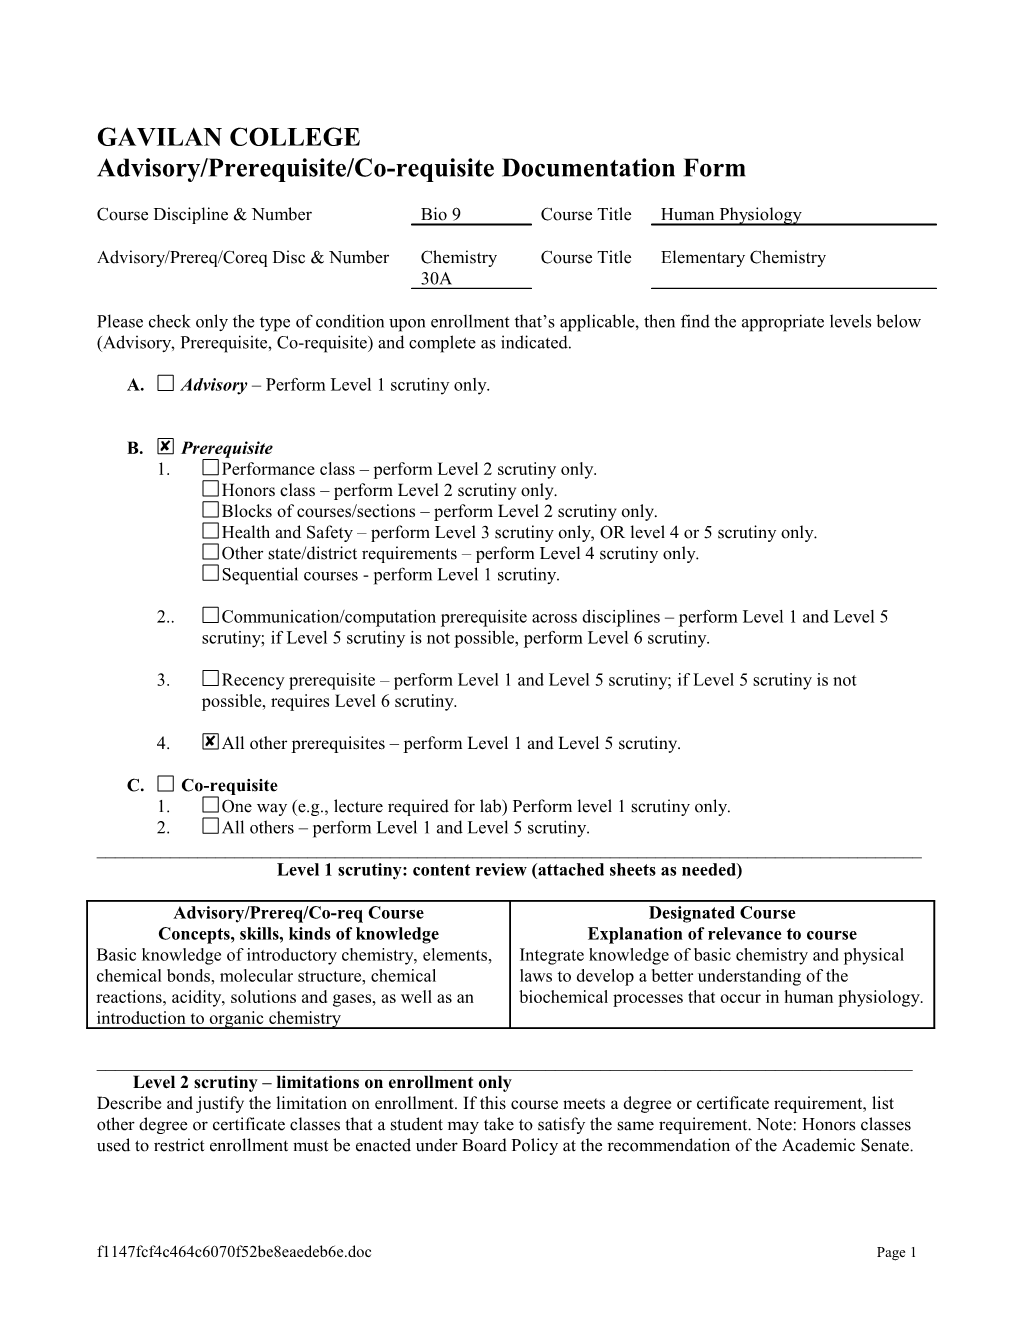 Advisory/Prerequisite/Co-Requisite Documentation Form s2